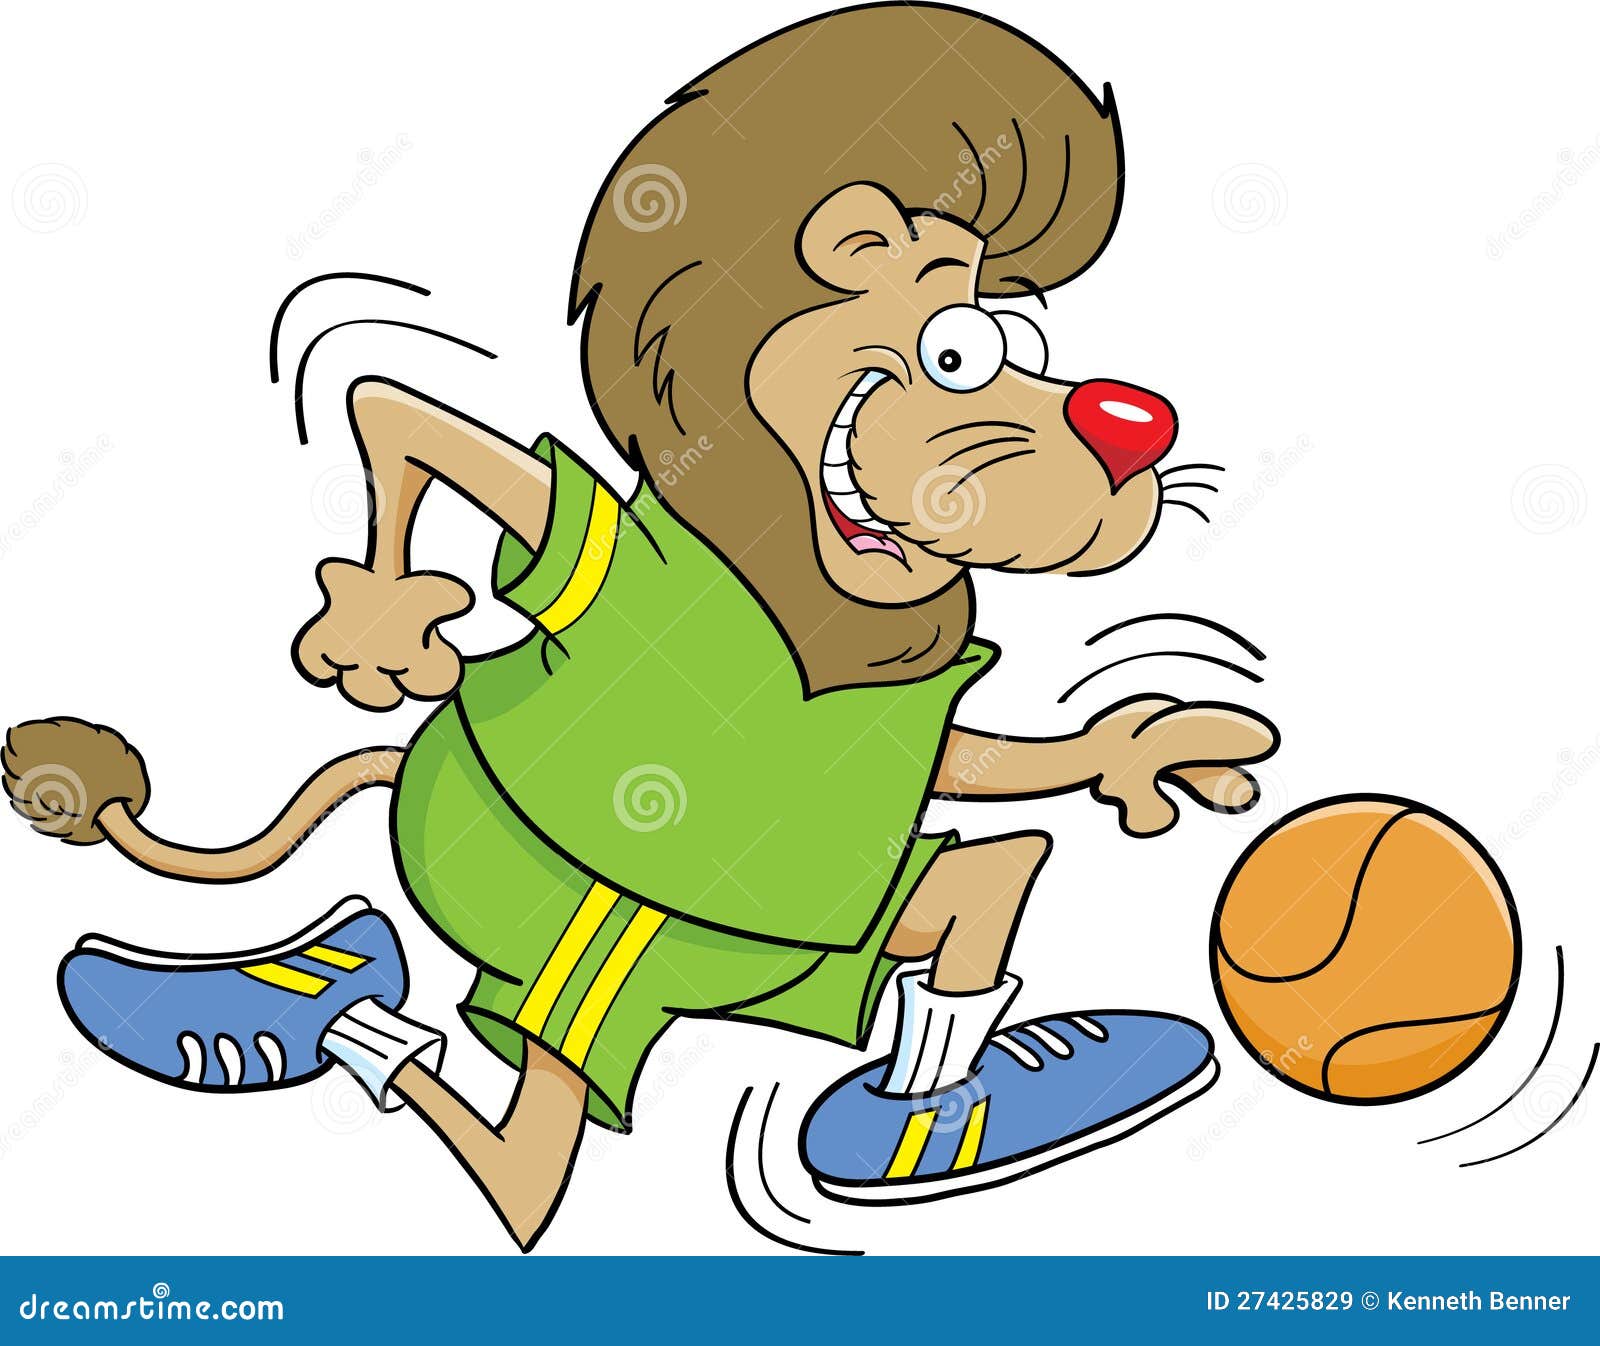 lion-basketball-player-27425829.jpg